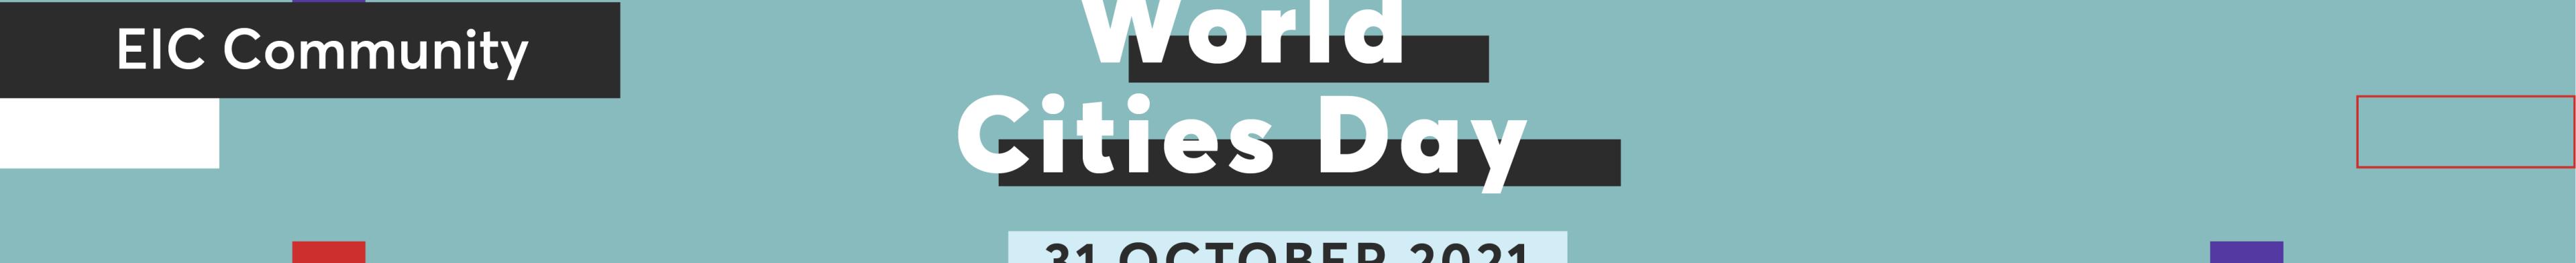 eic_world_days_world_cities_day_community_banner.jpg